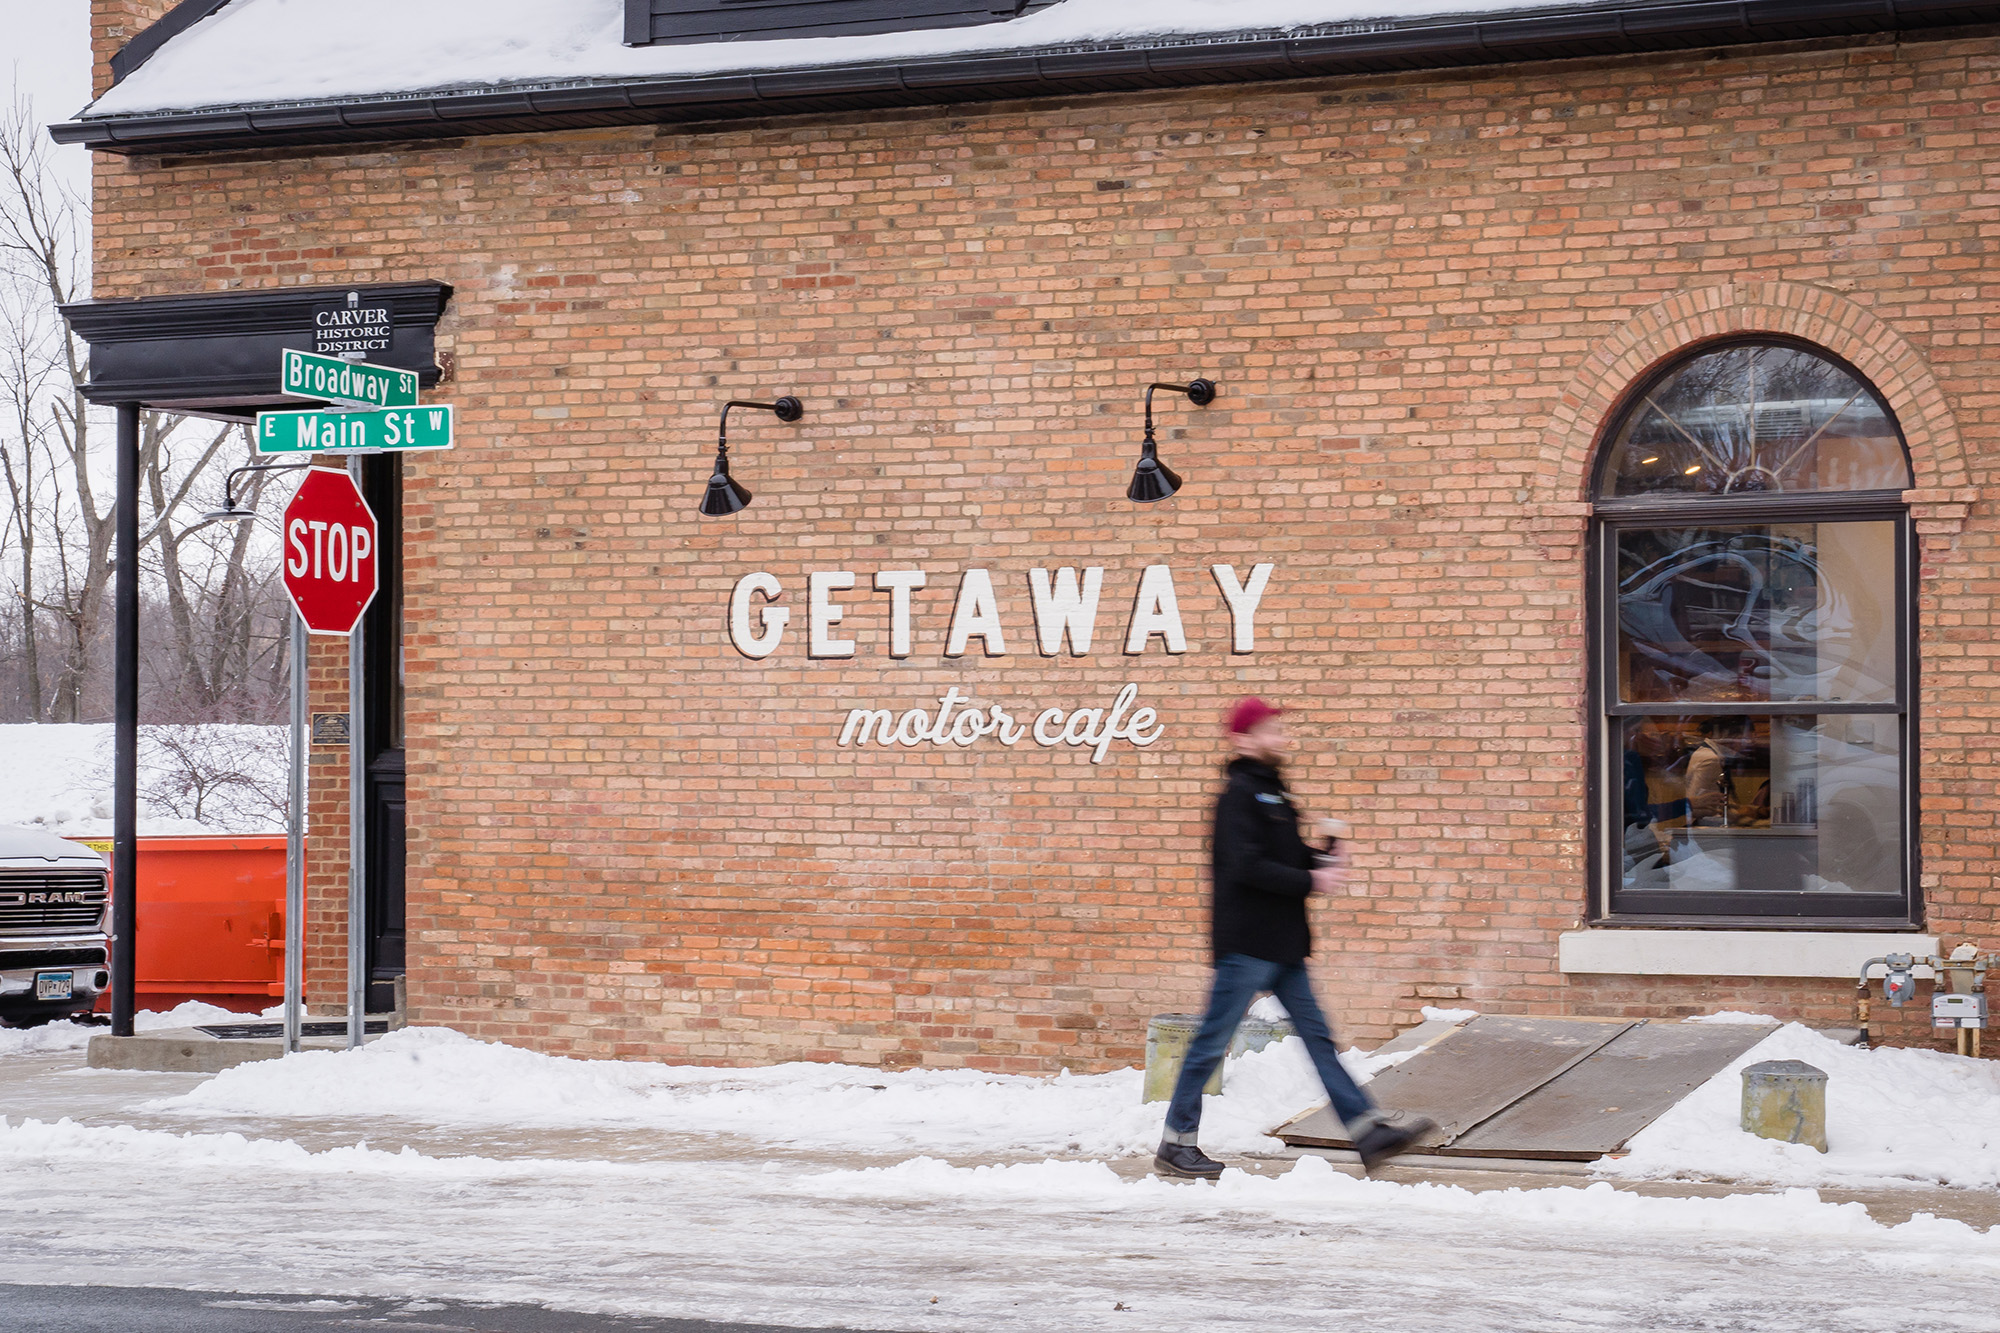 Getaway Motor Cafe